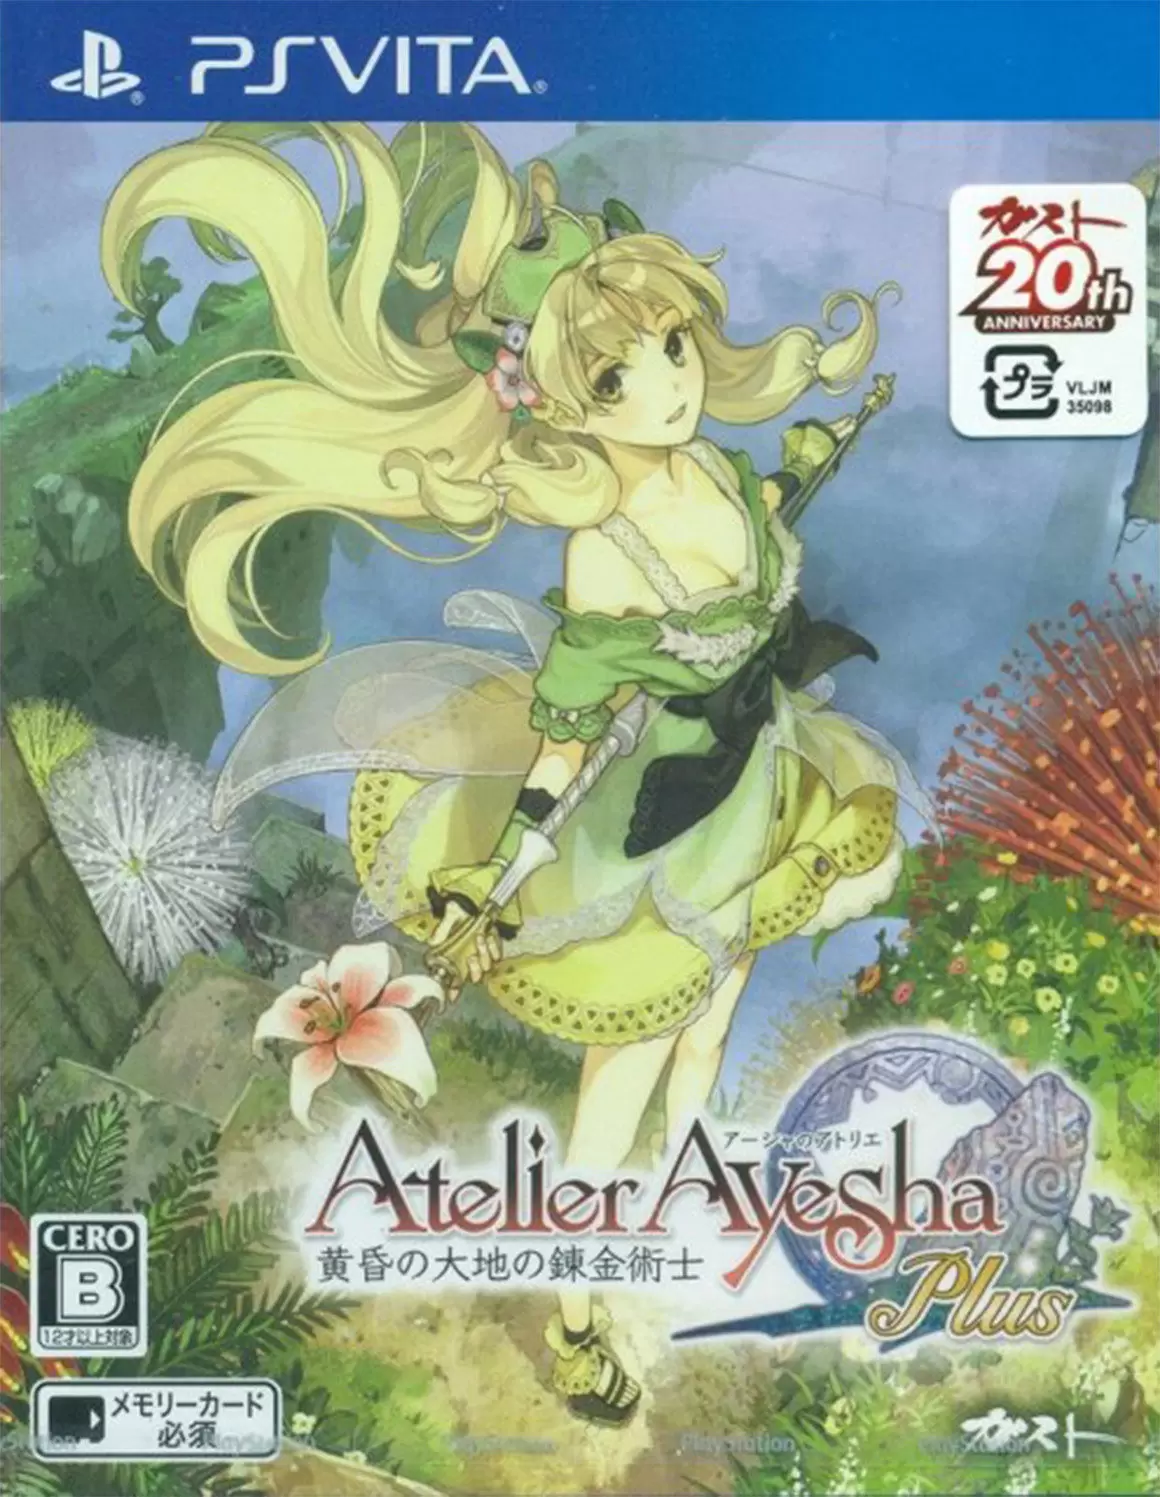 PS Vita Games - Atelier Ayesha Plus: The Alchemist of Dusk